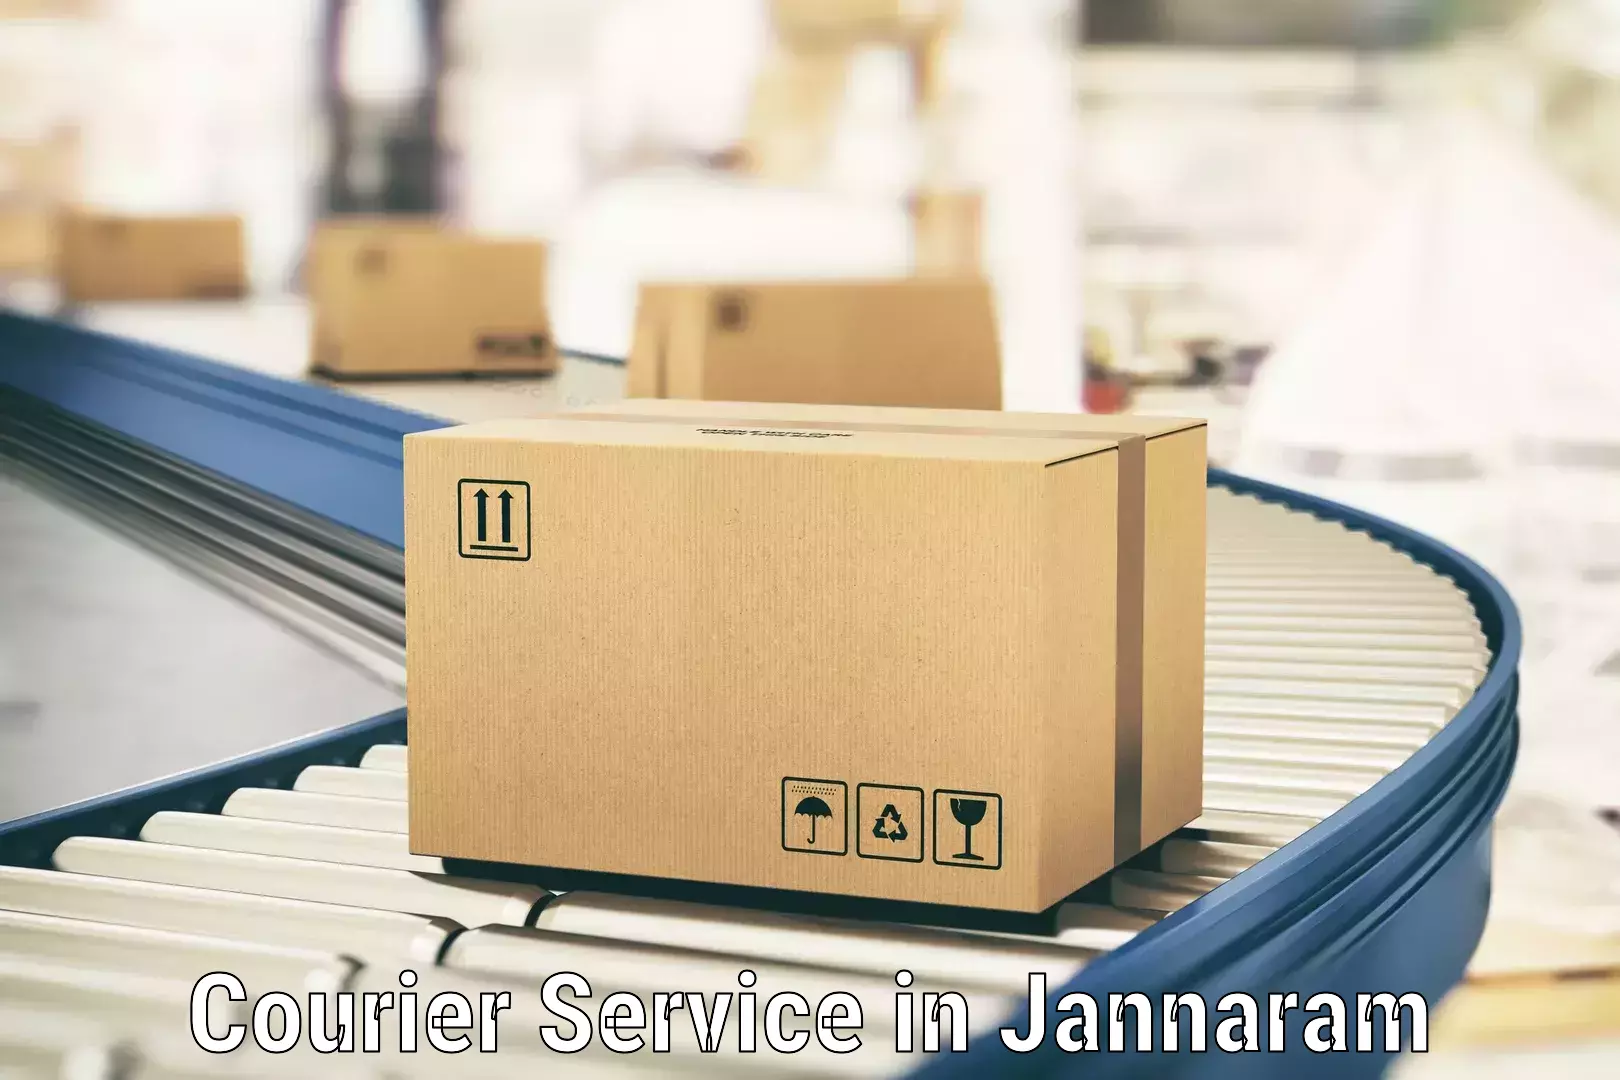 Efficient shipping operations in Jannaram